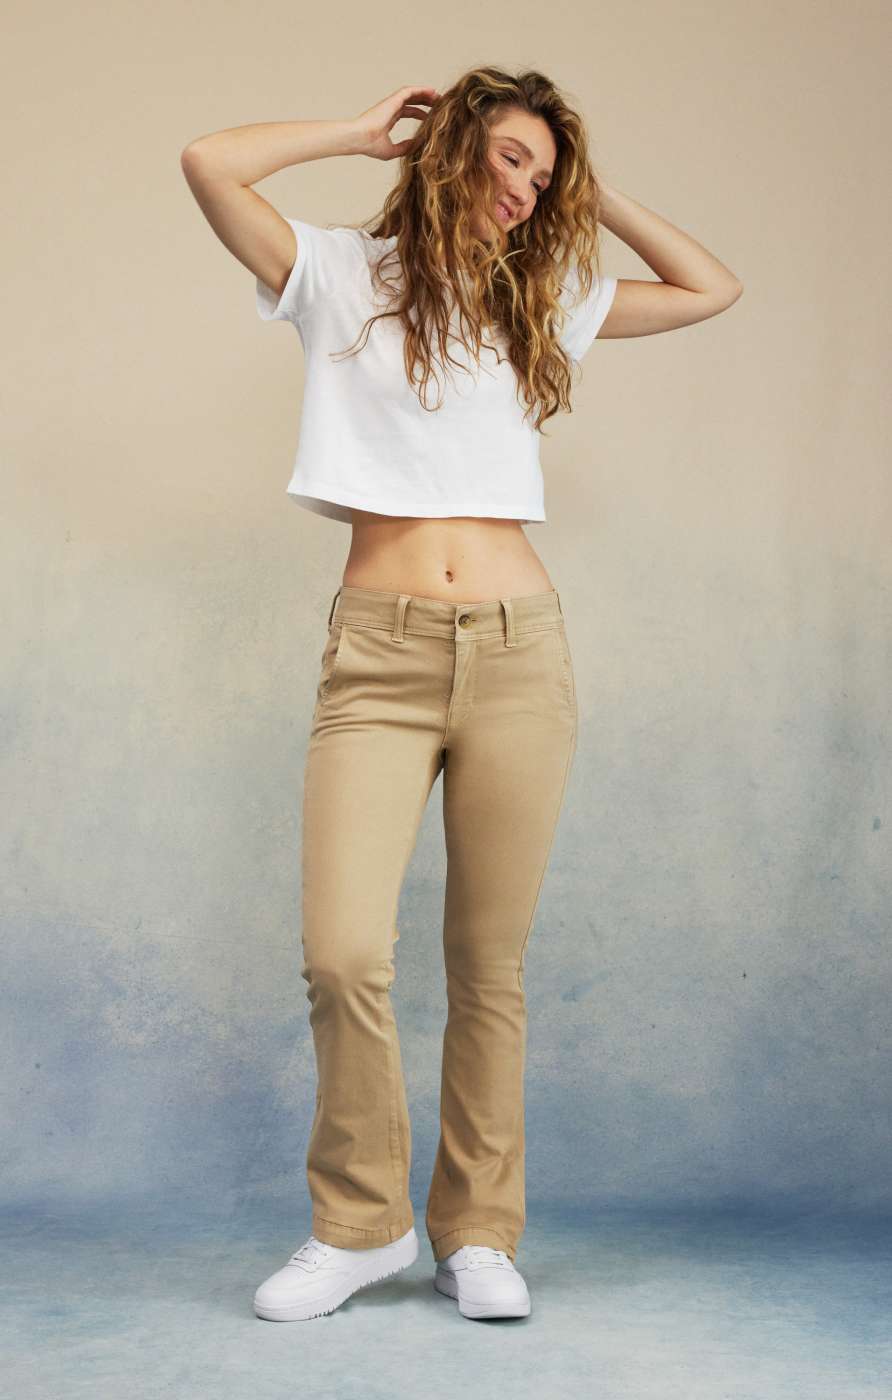 Akiihool Womens Work Pants Plus Size Women's Print Stretch Bell Bottom  Flare Pants Trousers (Khaki,XL) 